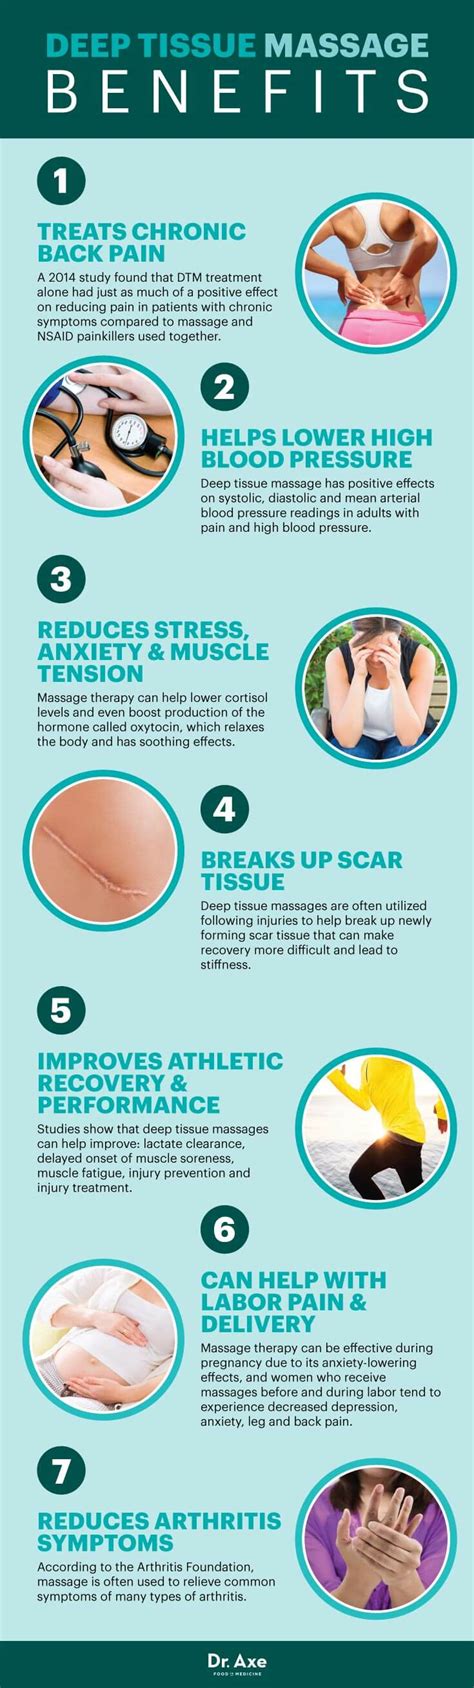 7 deep tissue massage benefits including treating chronic